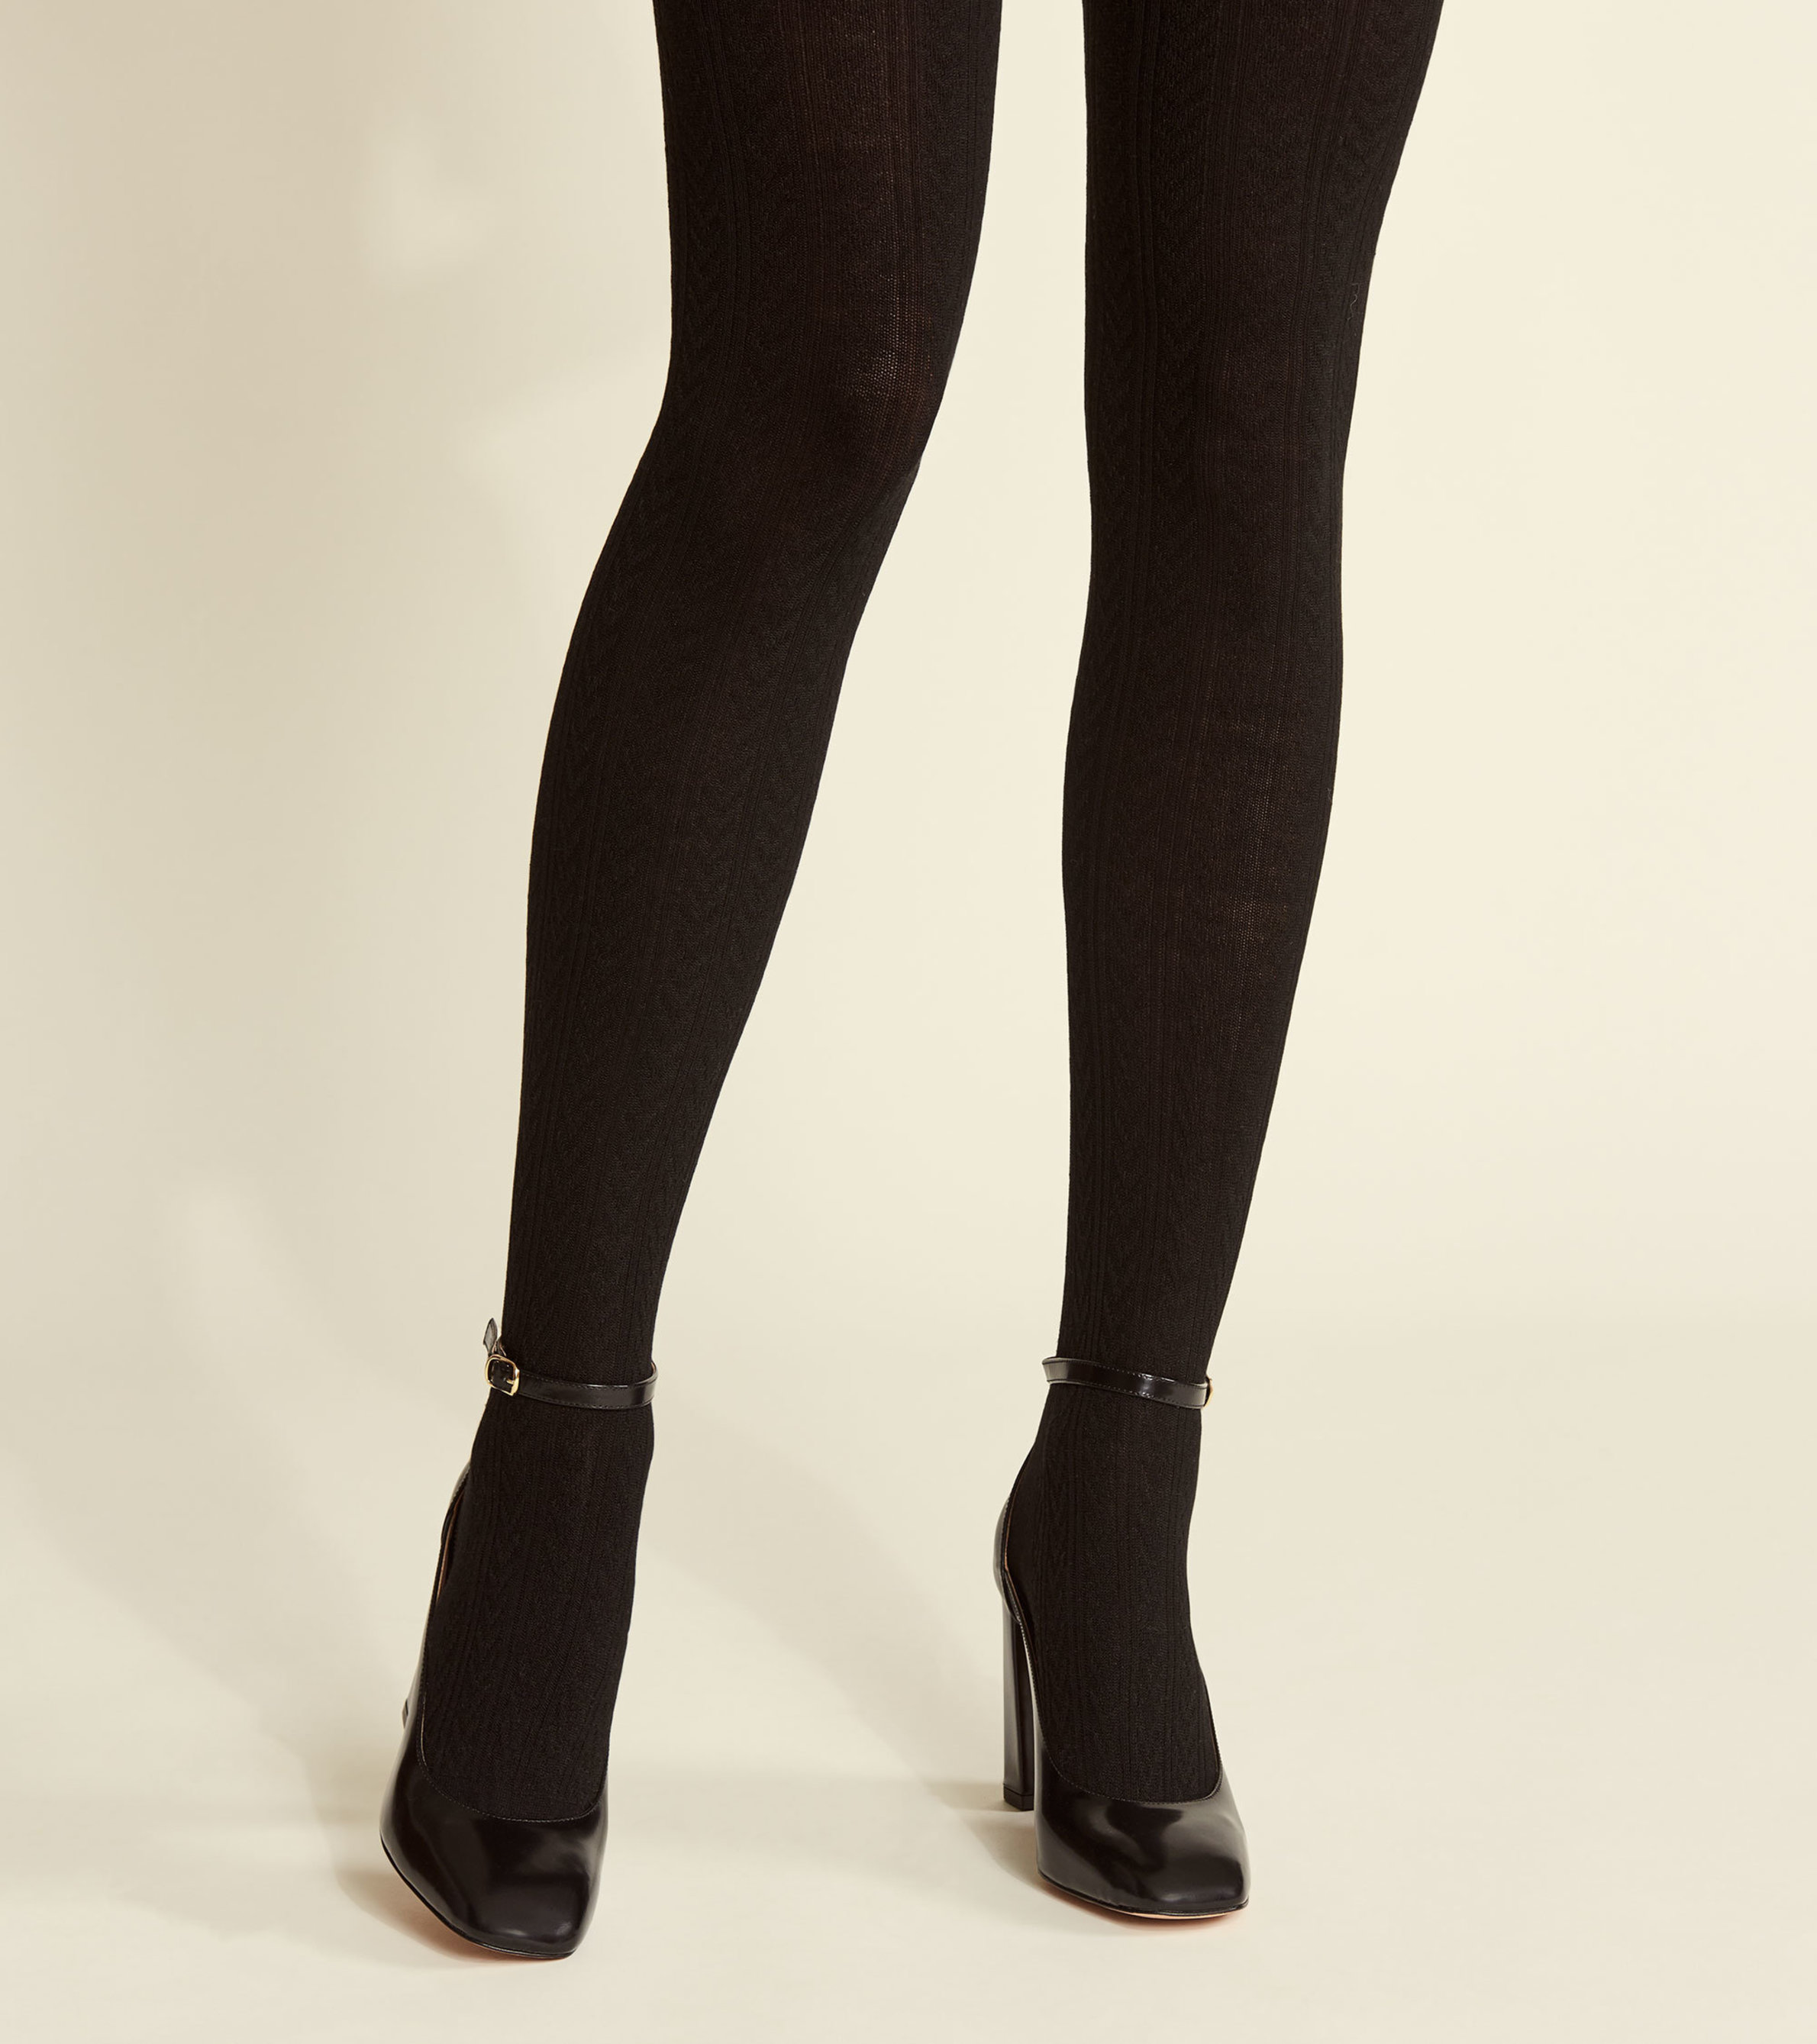 Ladies Cable Knit Fleece Leggings - Black 